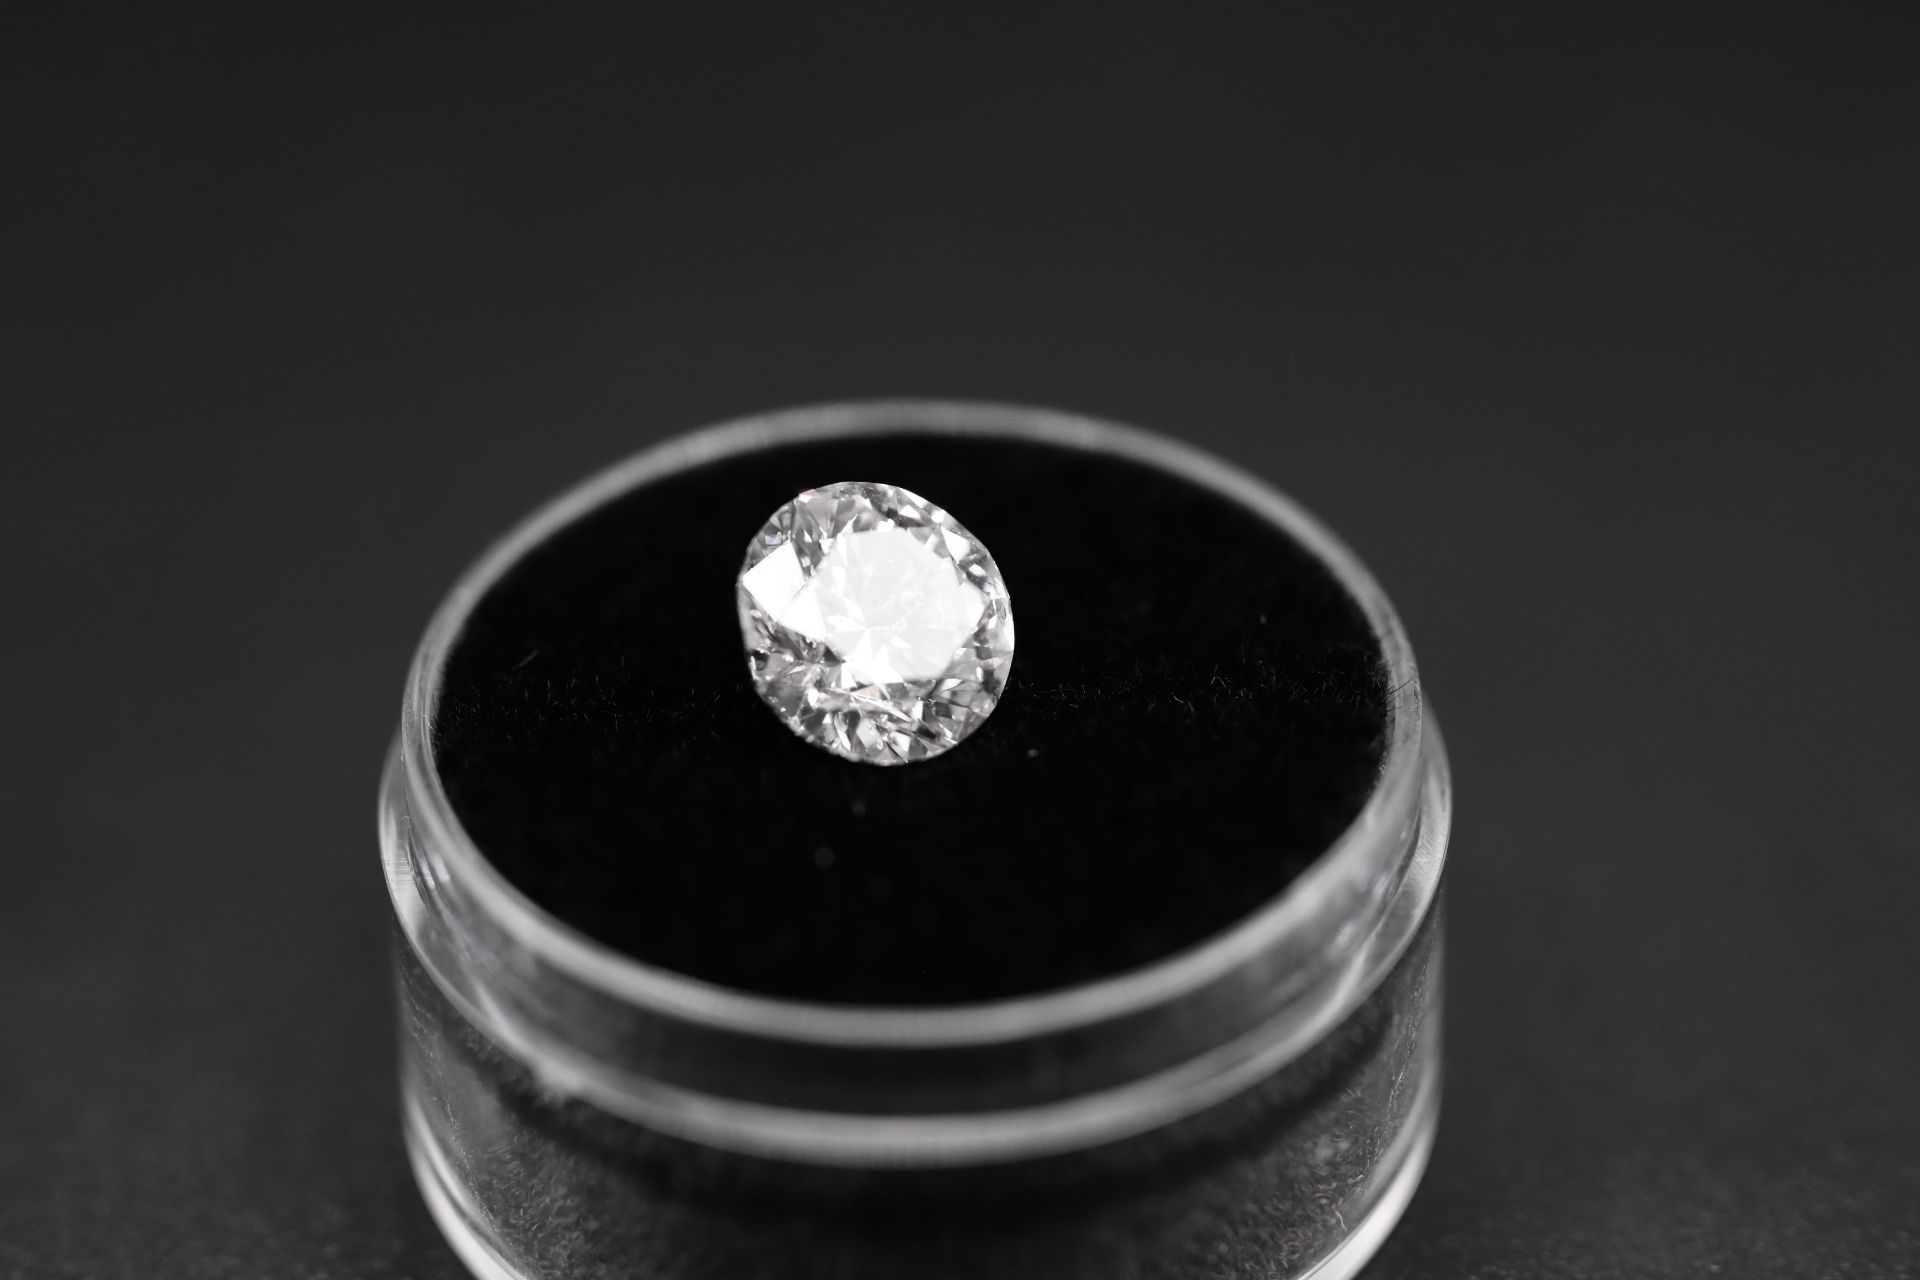 Round Brilliant Cut Natural Diamond 2.01 Carat Colour D Clarity VS1 - DGI Certificate - Image 2 of 24